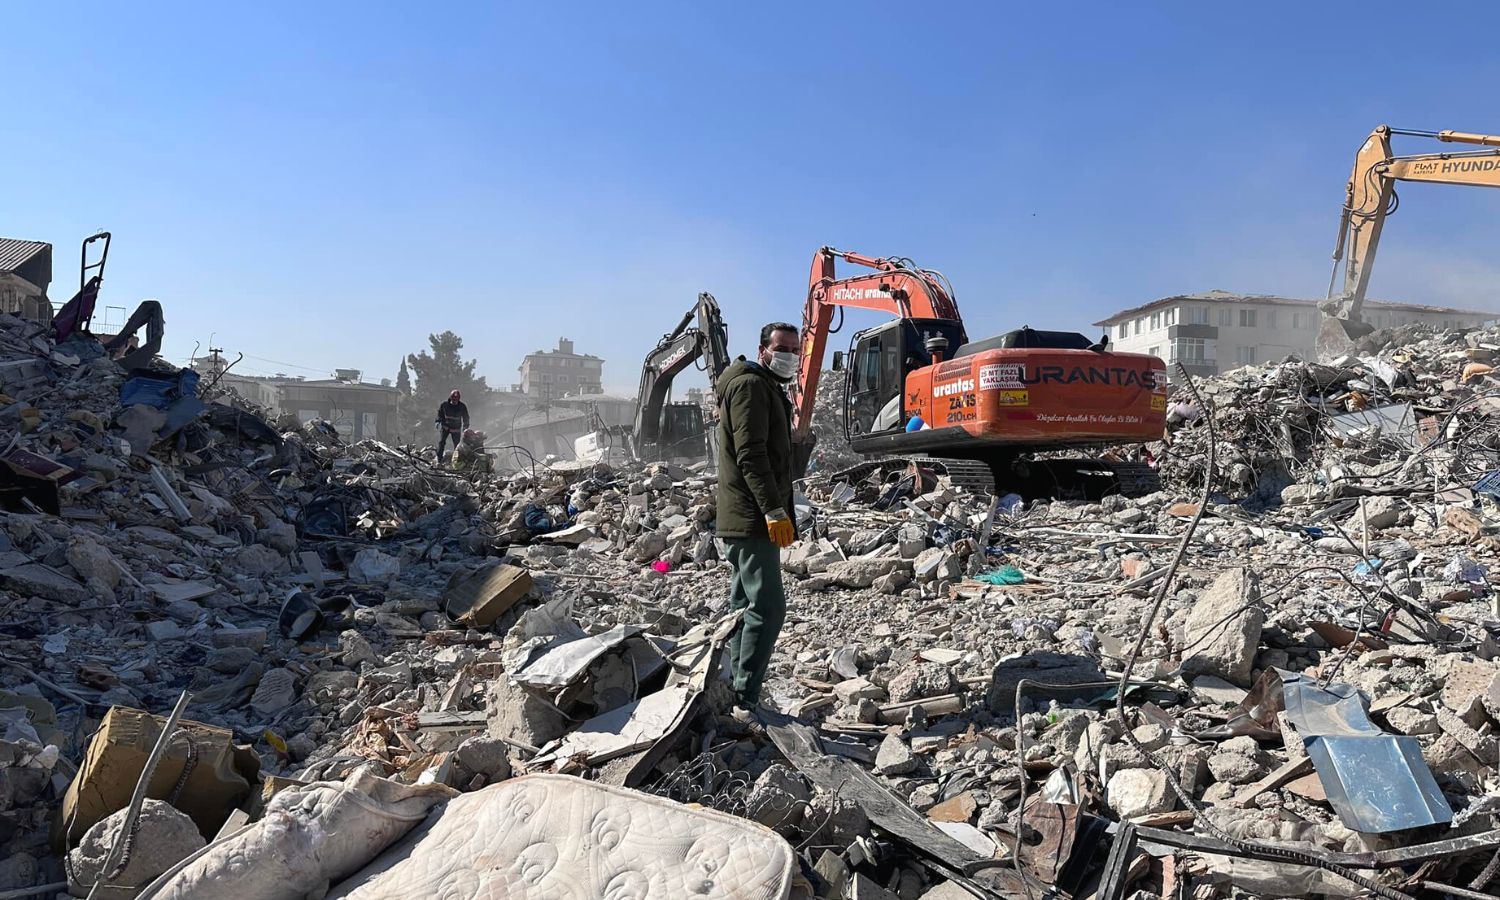 Syrian journalist Ahmed Haj Bakri on top of the rubble in Antakya city, following an earthquake that struck southern Turkey and northern Syria - February 15, 2023 (Facebook/Ahmed Haj Bakri)